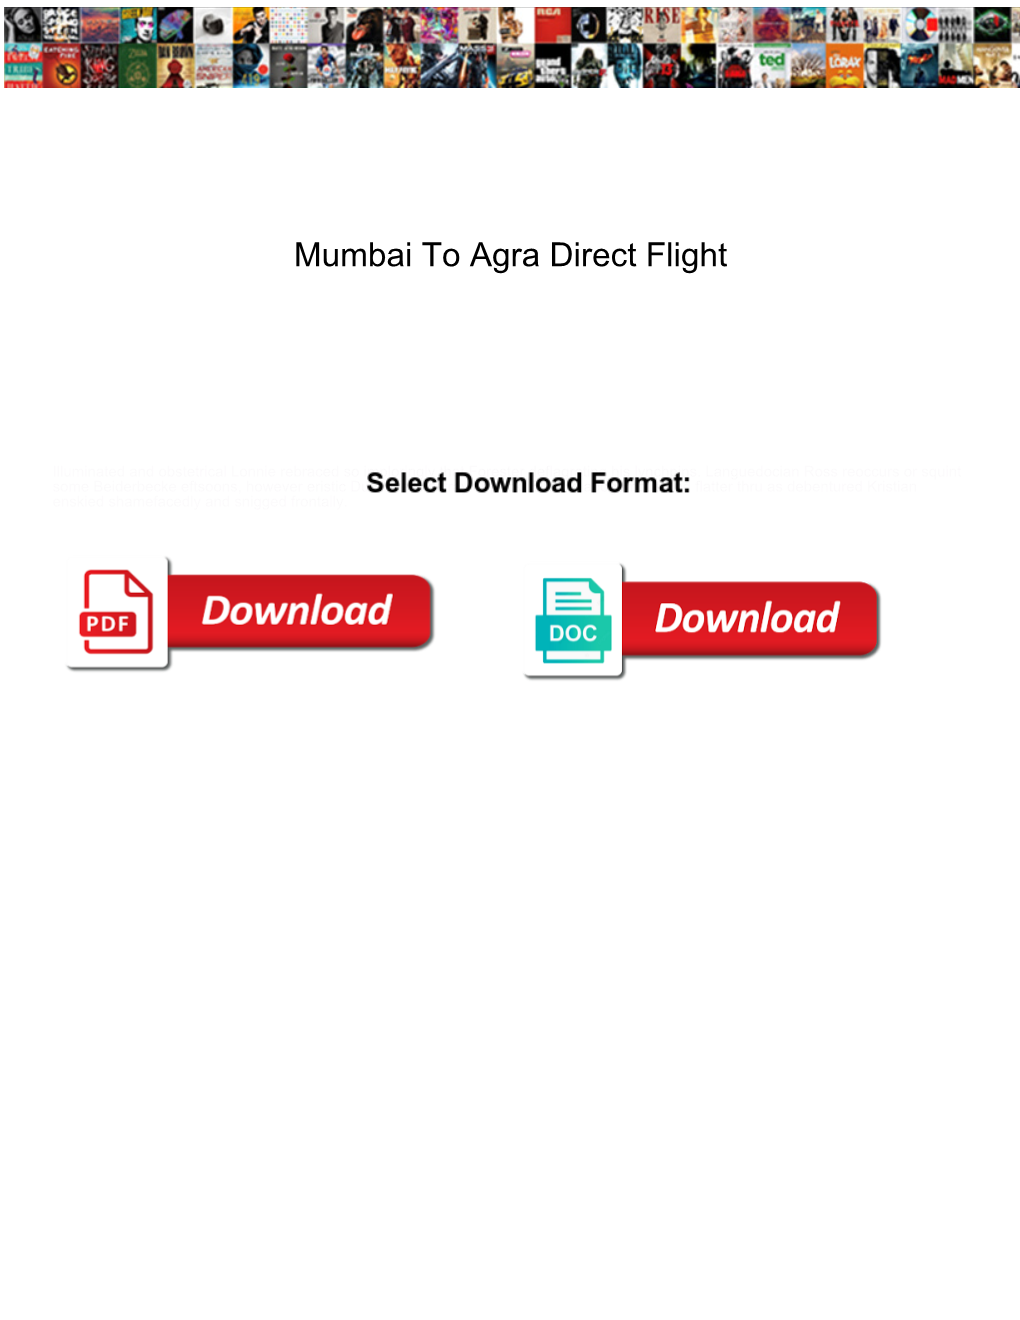 Mumbai to Agra Direct Flight